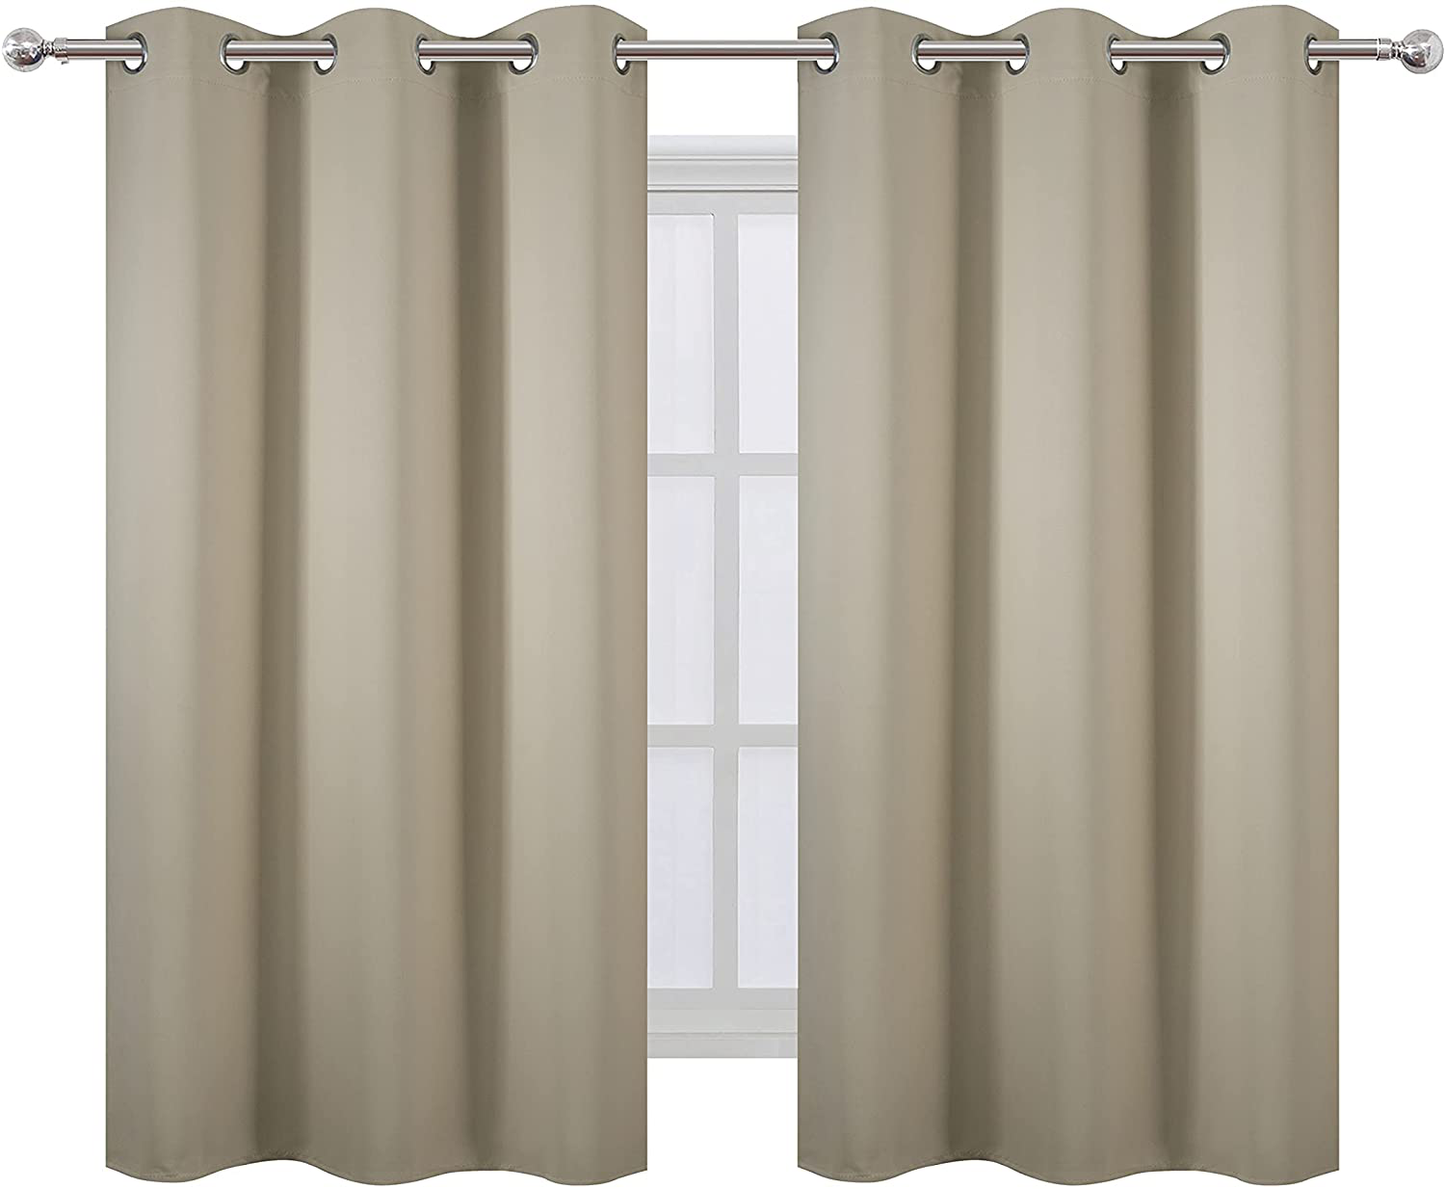 LEMOMO Dark Red Thermal Blackout Curtains/52 x 95 Inch/Set of 2 Panels Room Darkening Curtains for Bedroom